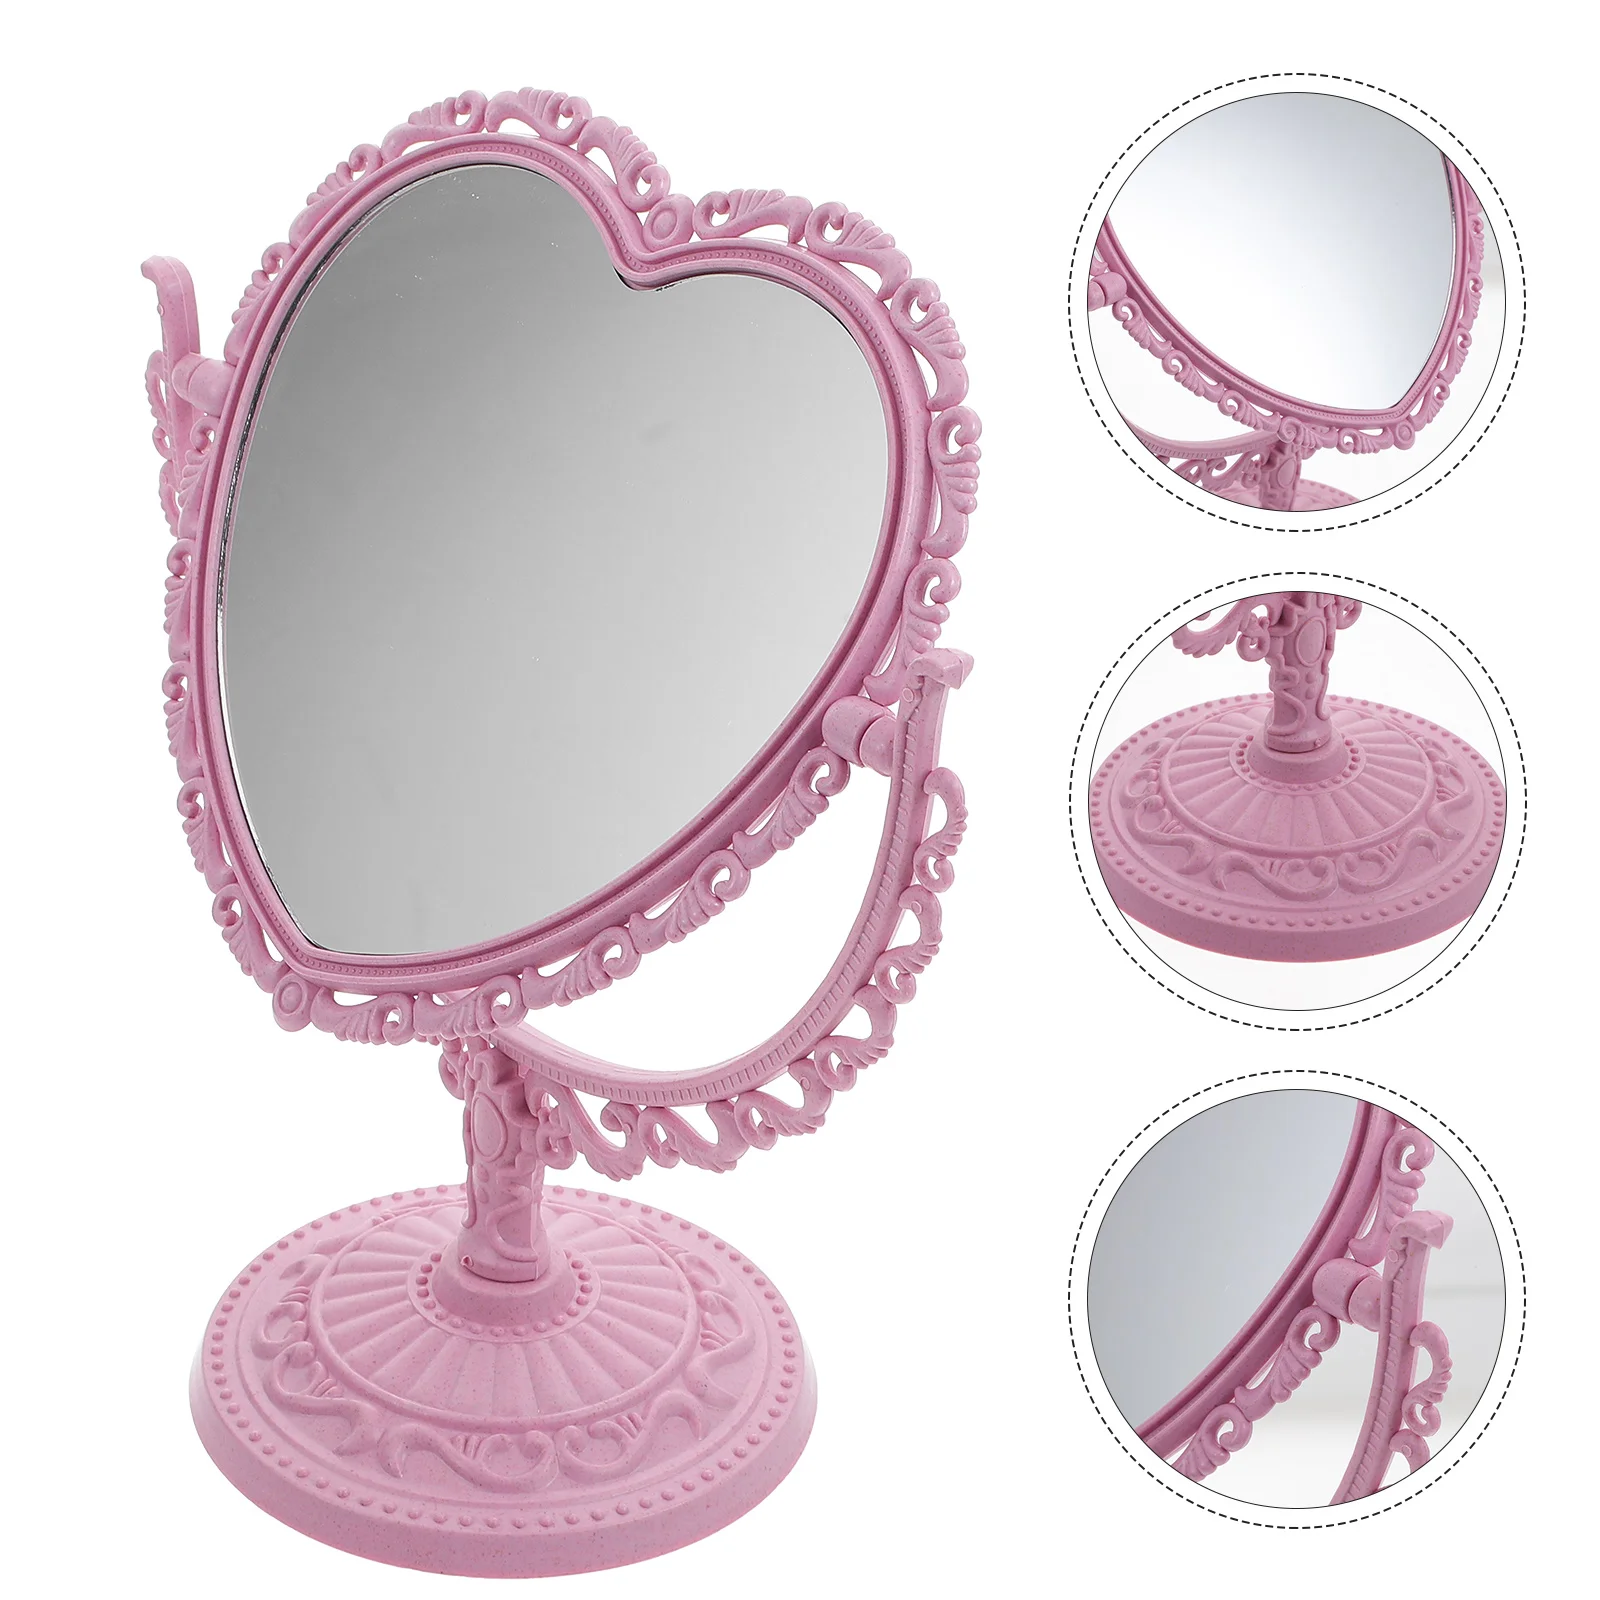 

Rotating Vanity Mirror Bedroom Heart Modeling Decor Vintage Desktop Girl Makeup Plastic Dresser Decoration Miss Girls Table